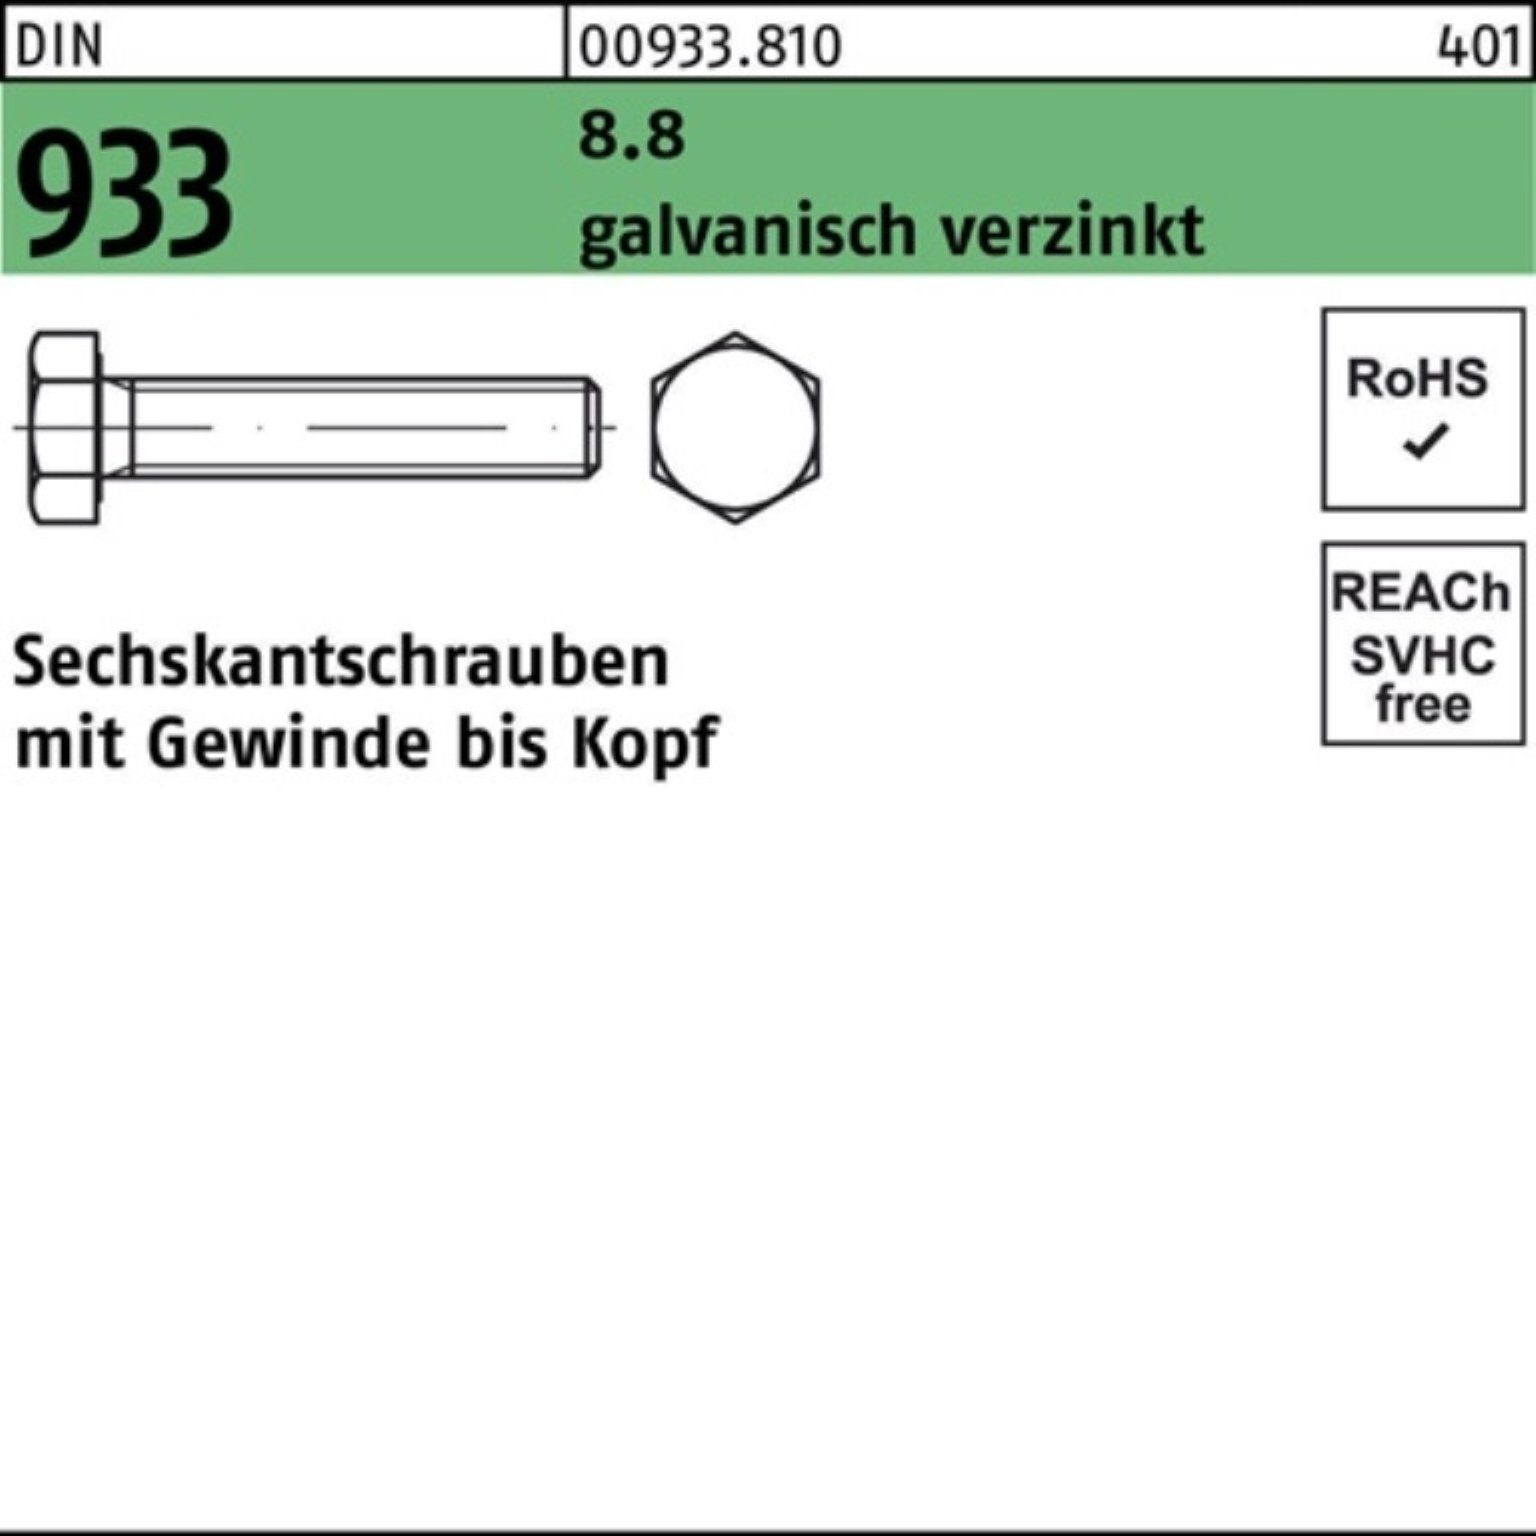 Sechskantschraube VG Stüc 933 Sechskantschraube 1 45 8.8 M30x 100er DIN galv.verz. Pack Reyher